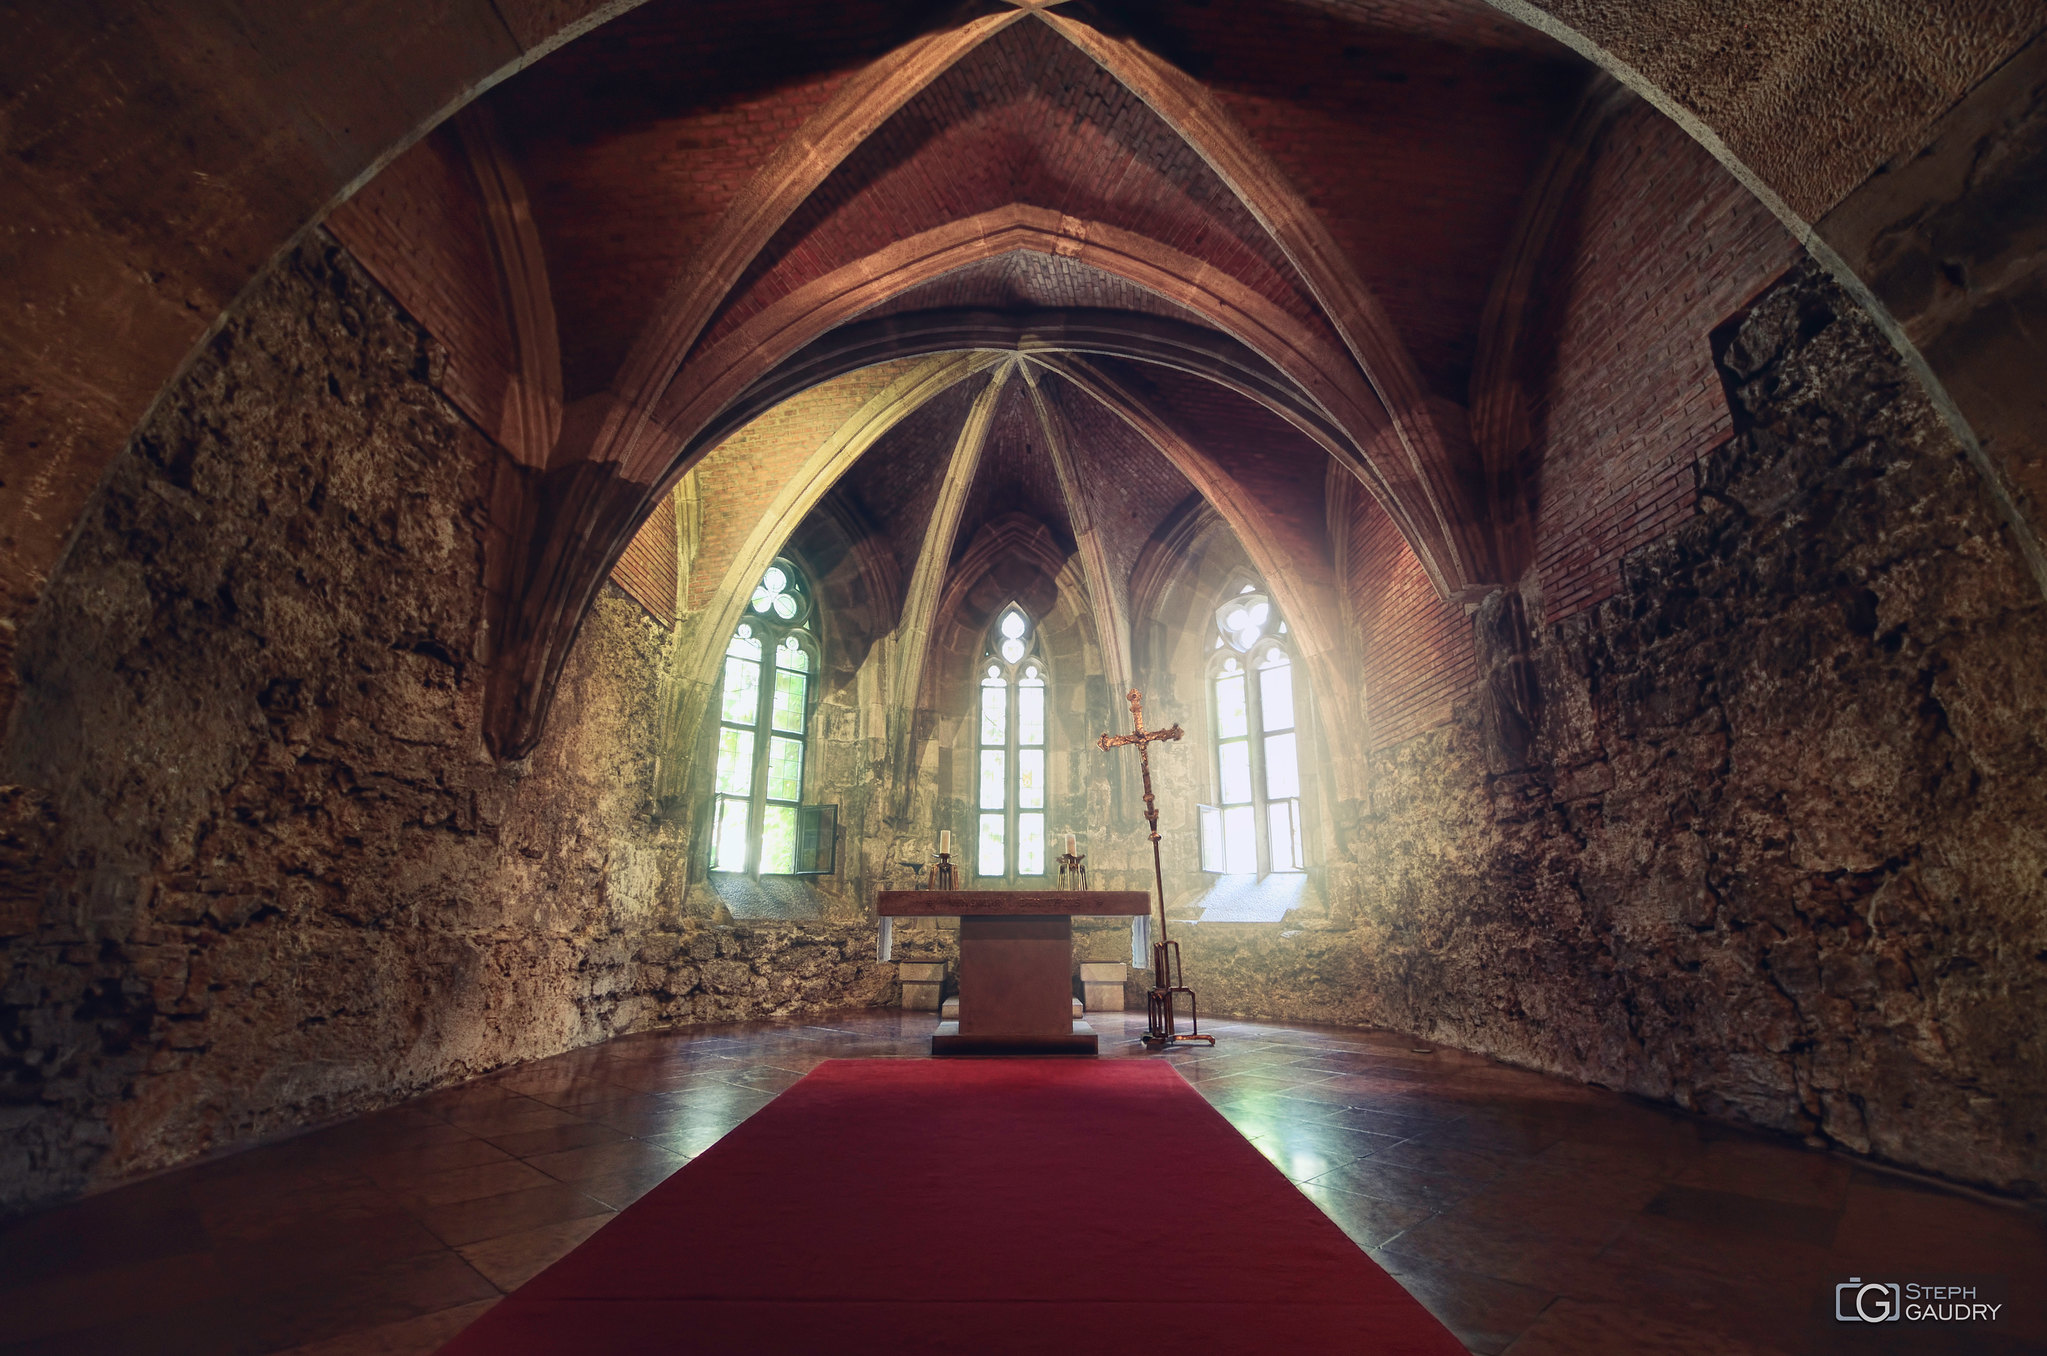 Chapel - Mediavel Palace (basement) [Click to start slideshow]